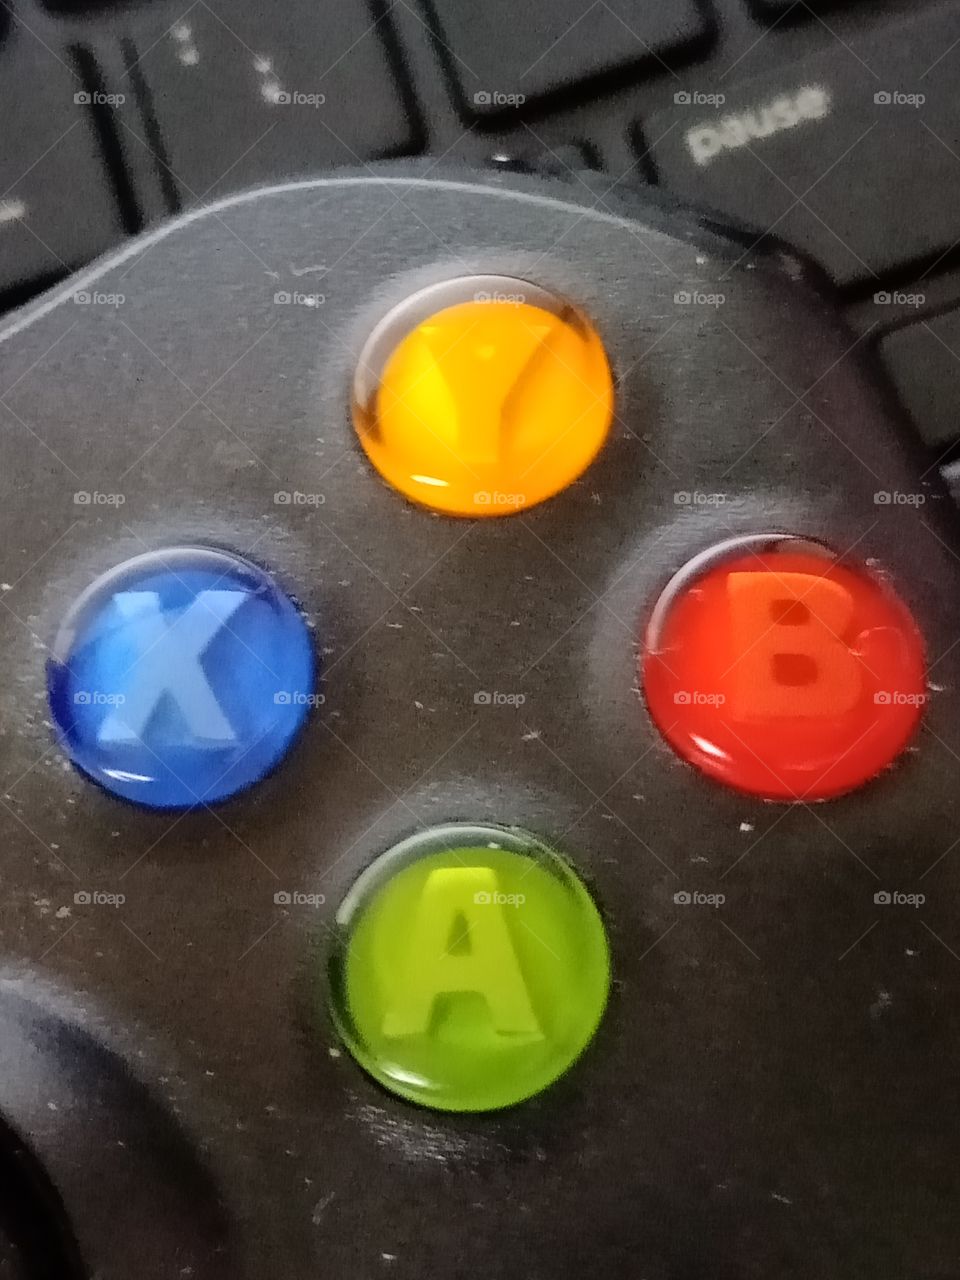 a video game controller up close